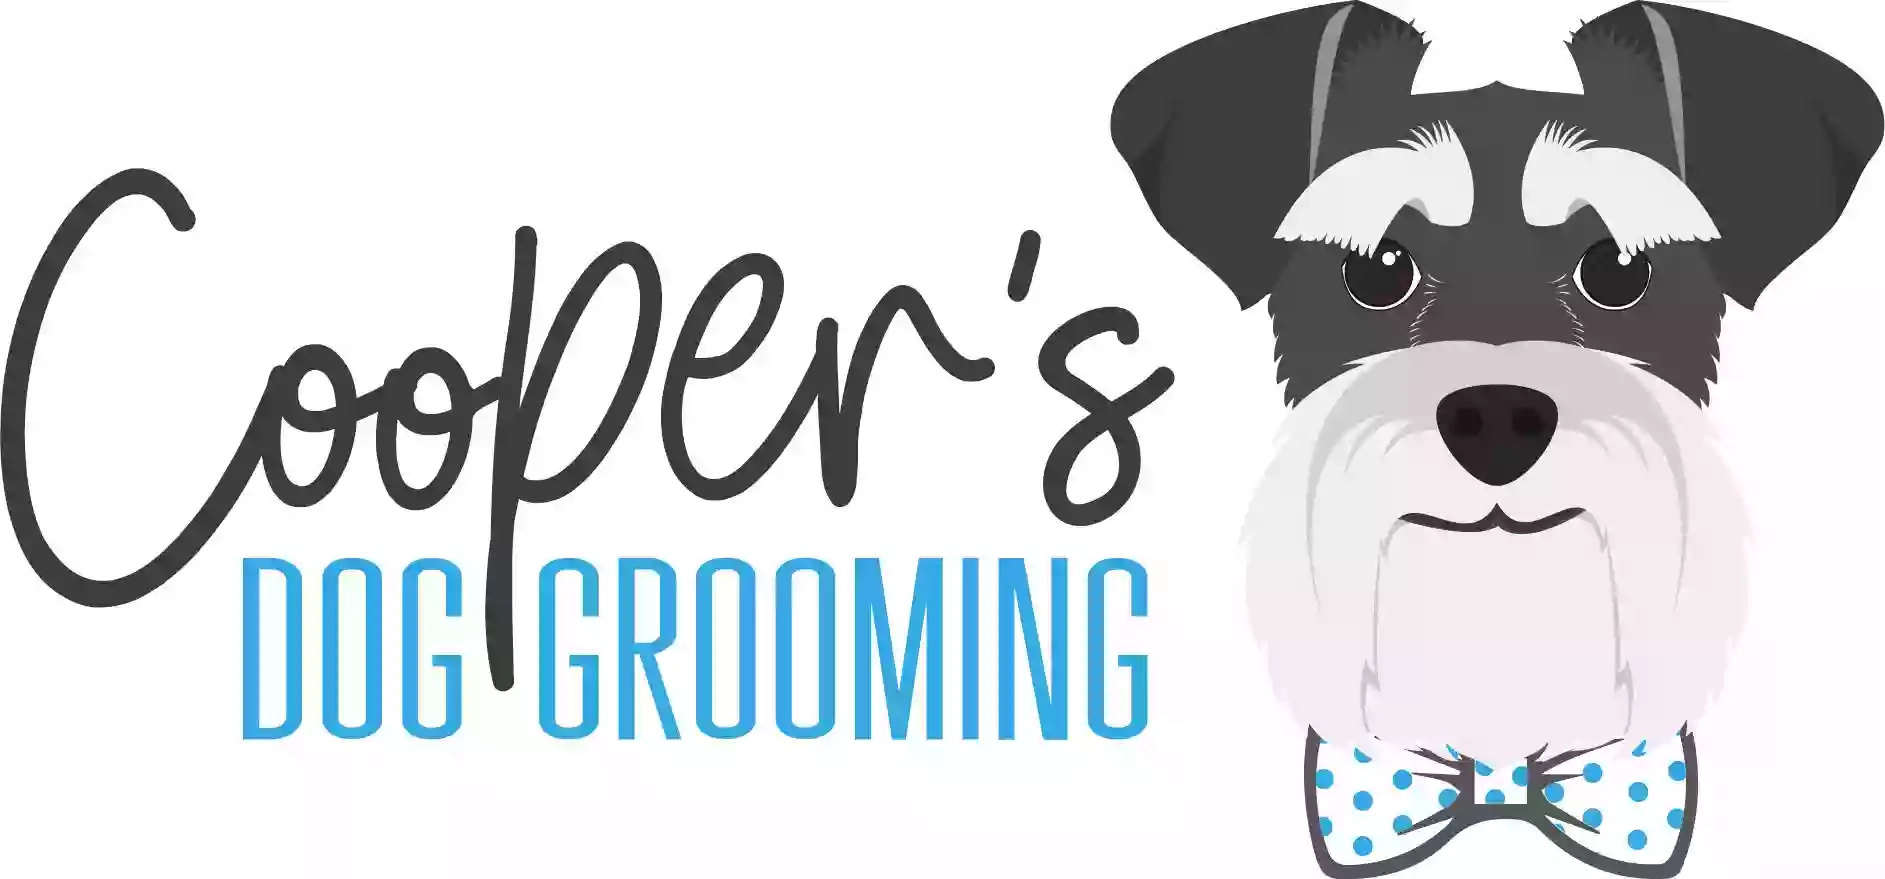 Coopers Dog Grooming Ltd